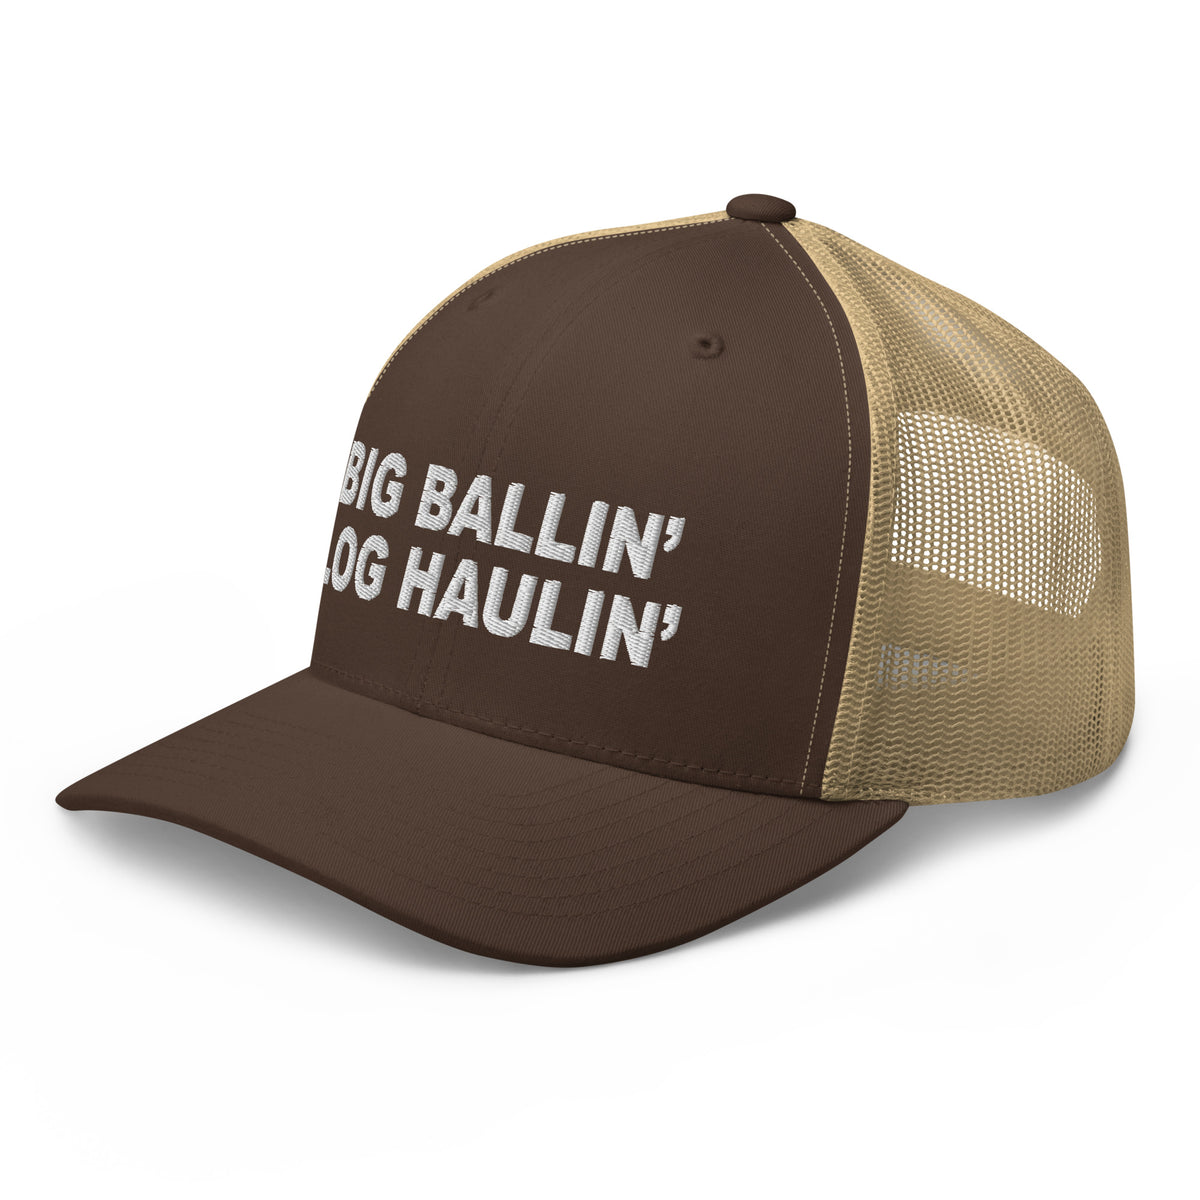 Big Ballin' Log Haulin' - Trucker Cap - Free Shipping